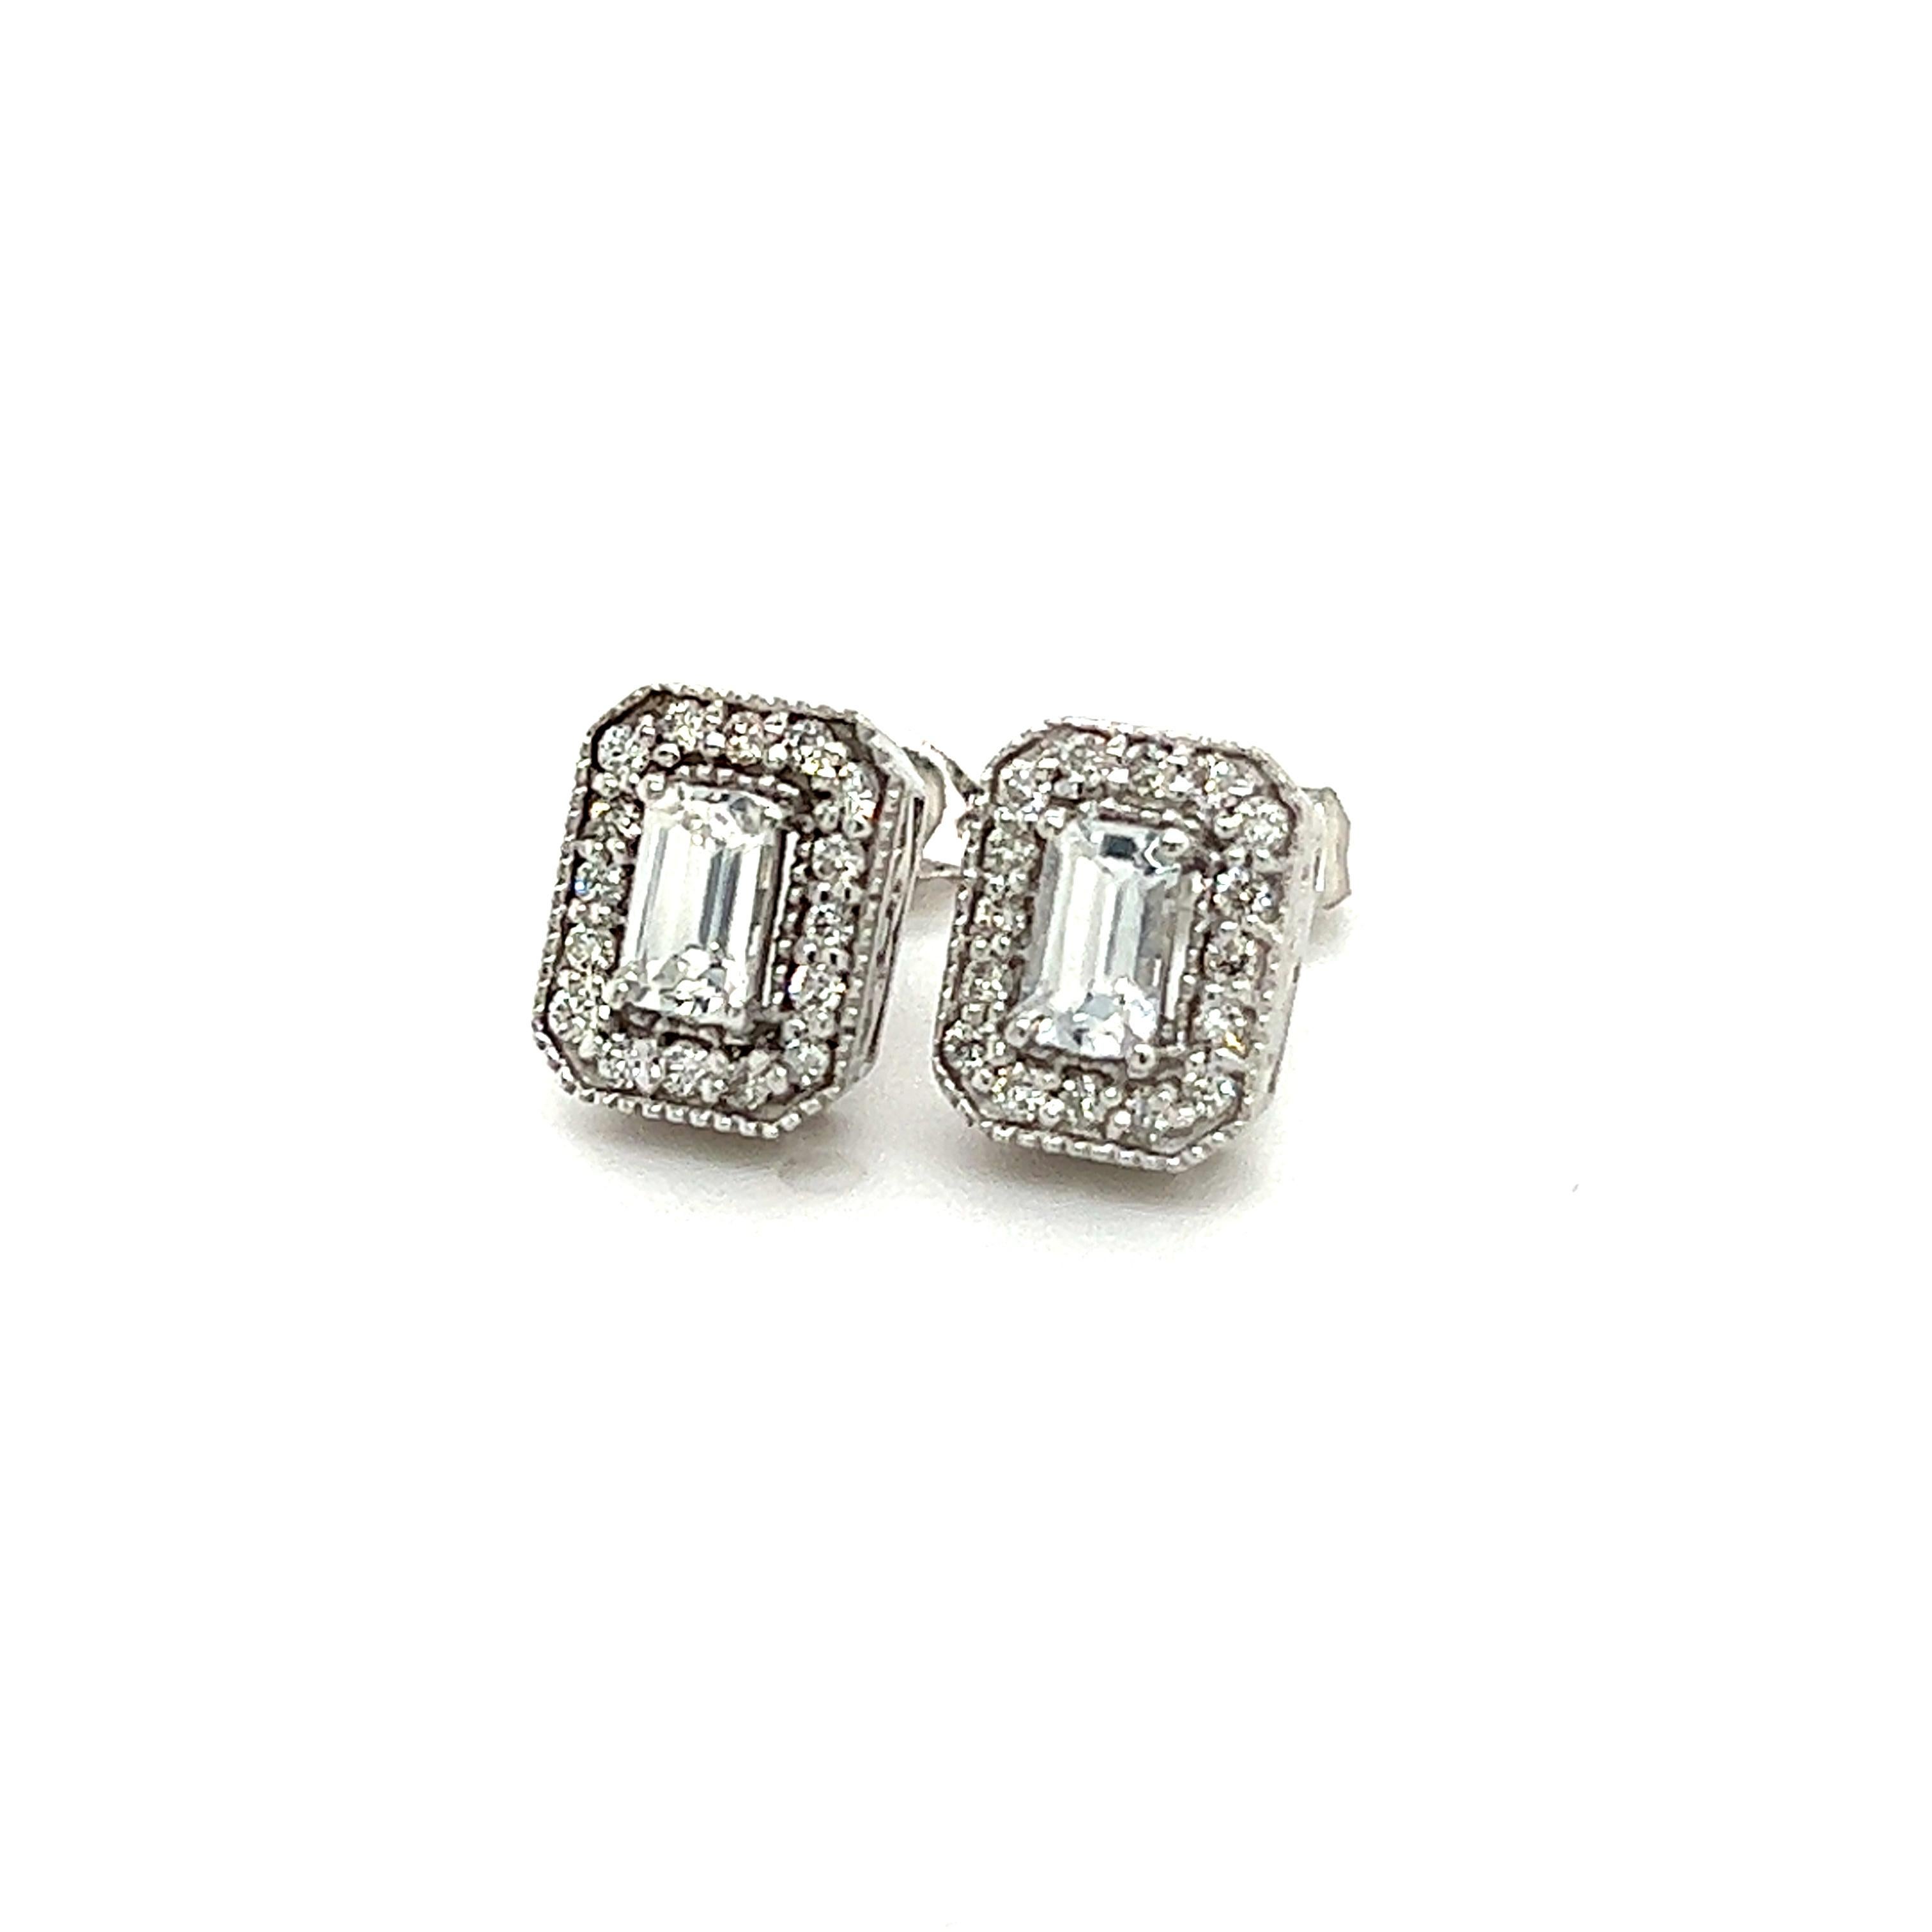 Natural Sapphire Diamond Stud Earrings 14k W Gold 0.96 TCW Certified For Sale 4